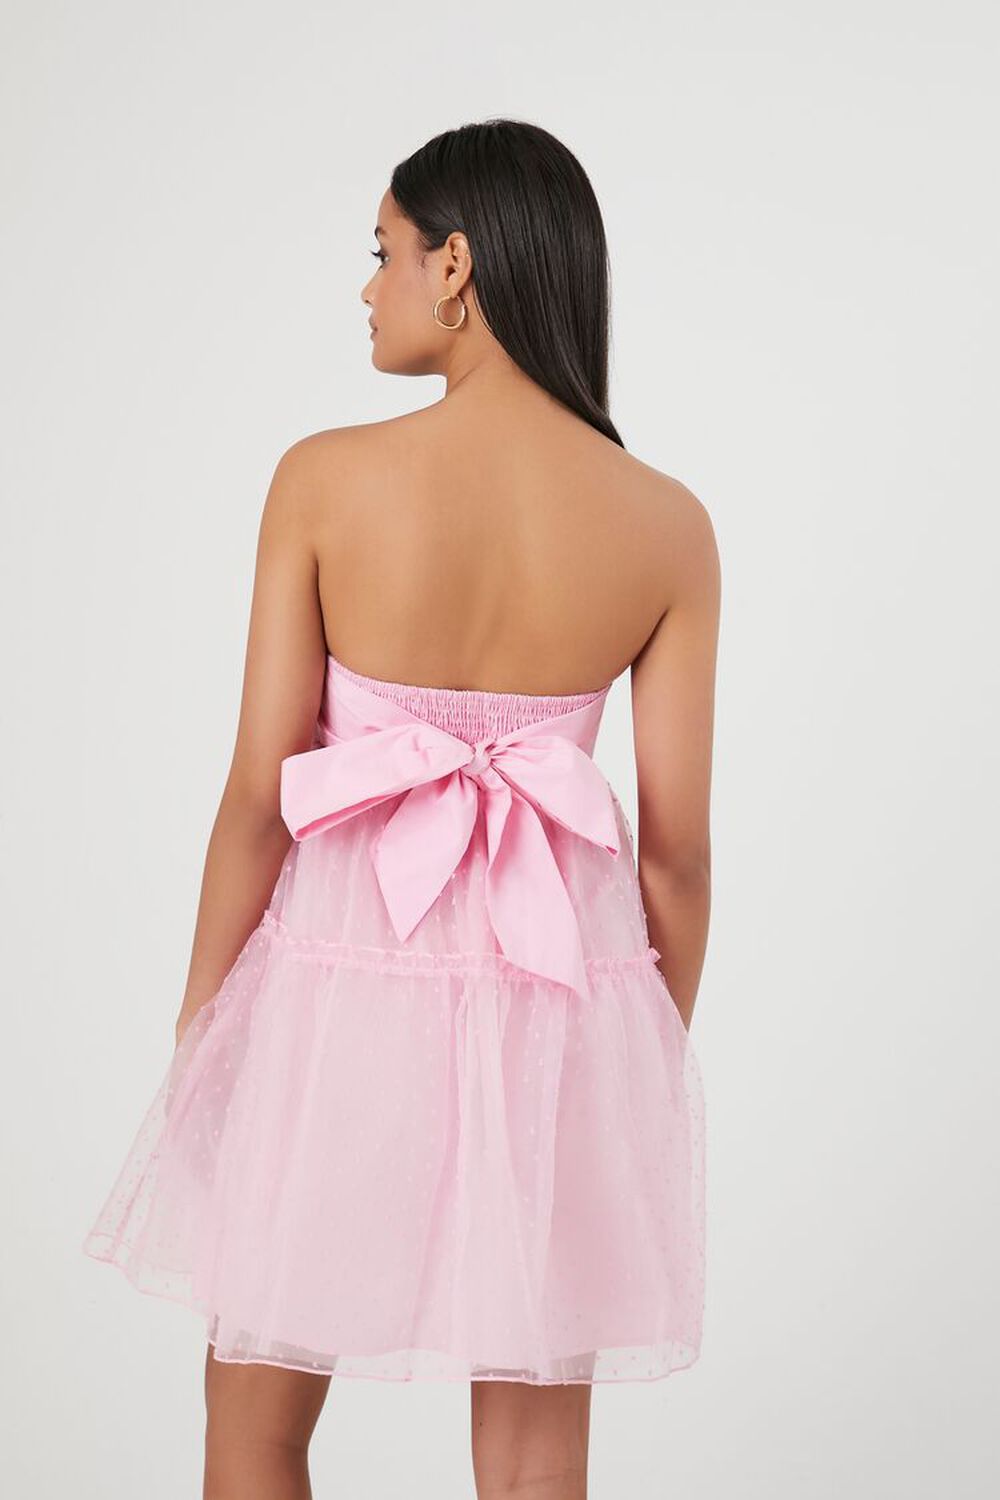 ROMINA Dress Set: Crepe Bow Top + High Slit Skirt (Blush Pink) – Zoo Label